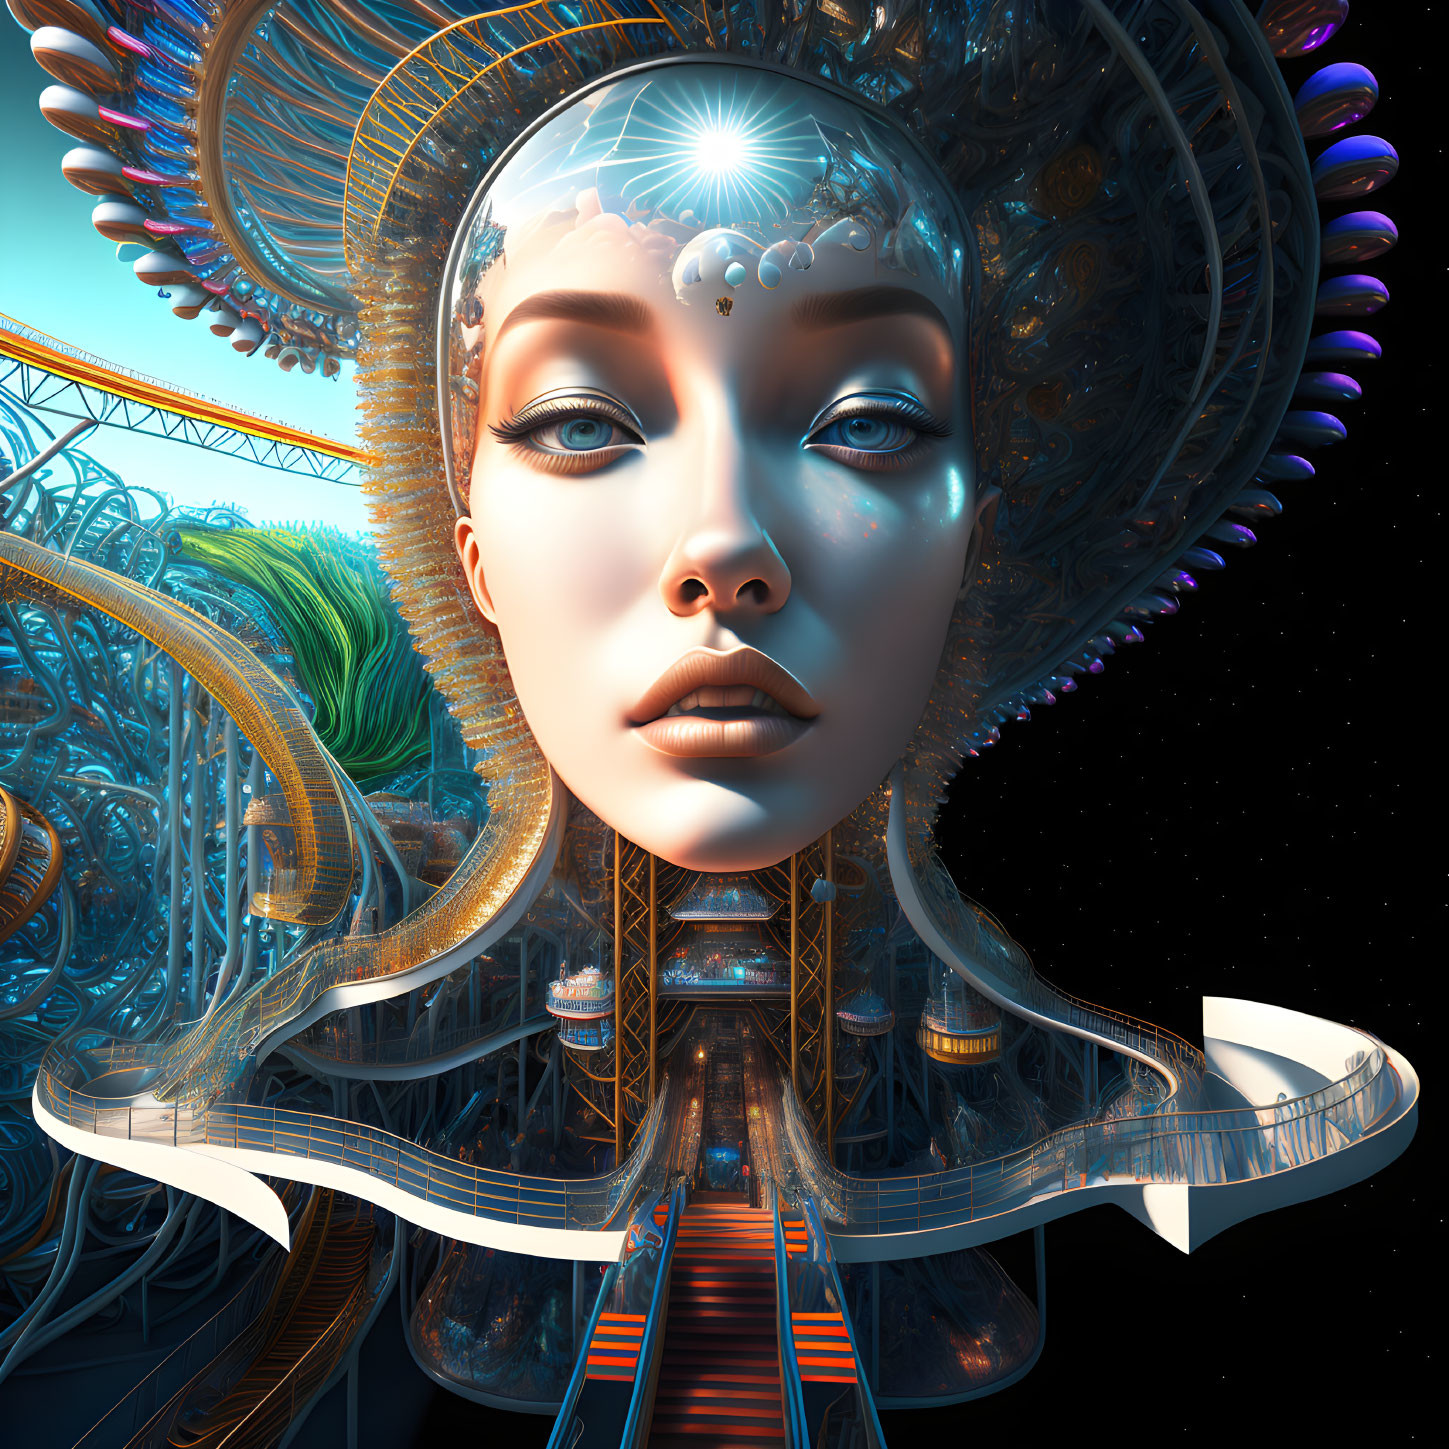 Futuristic robotic woman with intricate headpiece in sci-fi cityscape